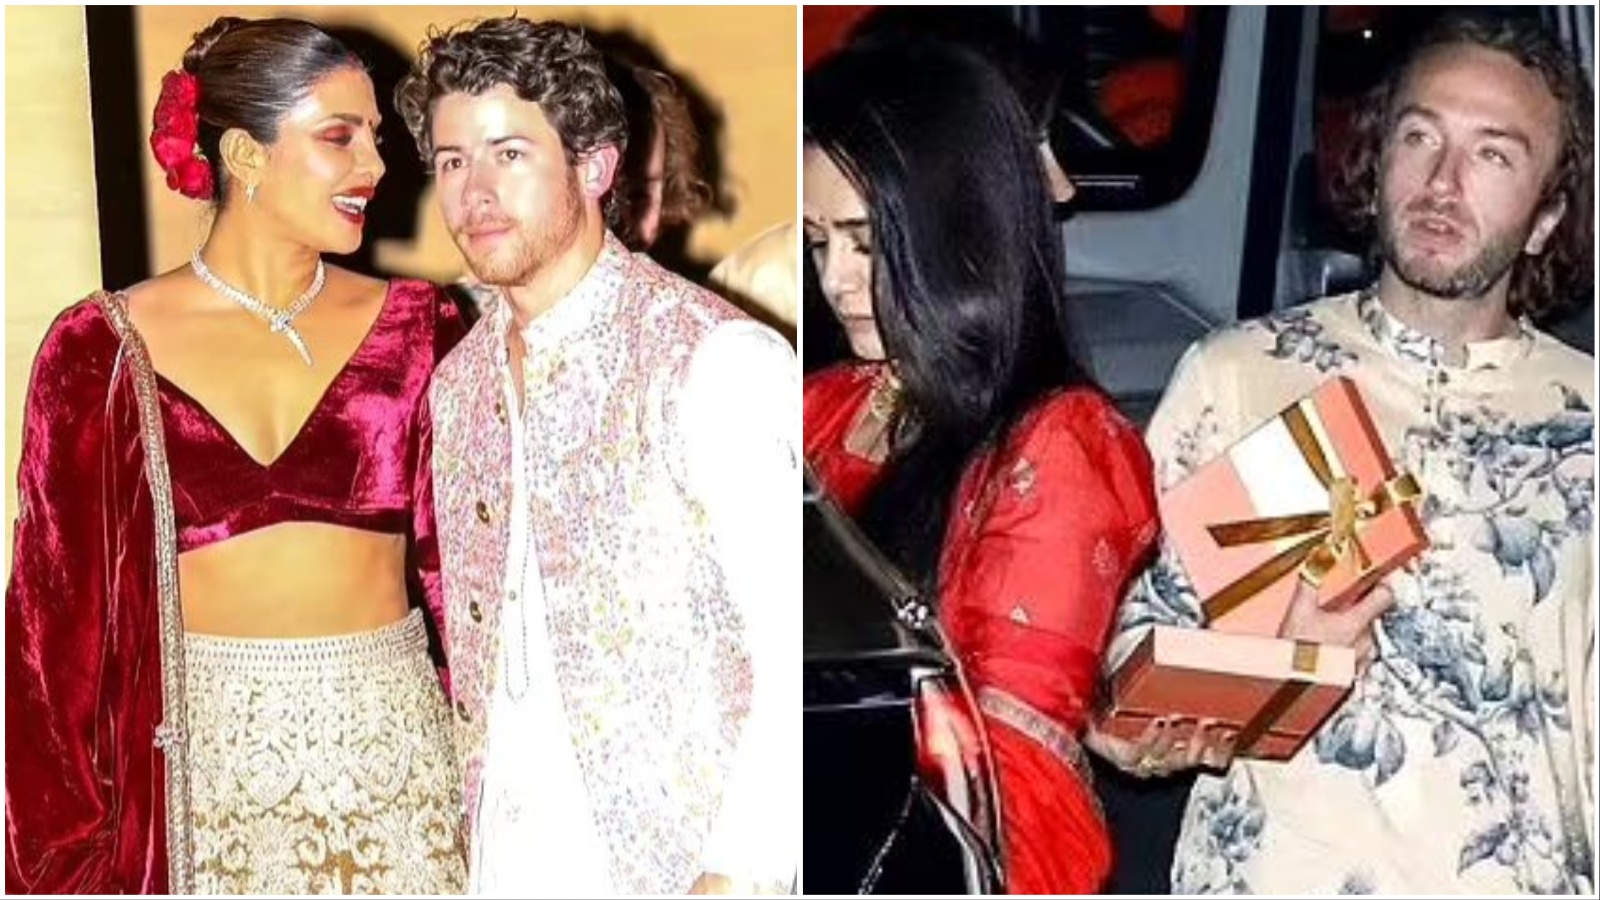 Priyanka Chopra-Nick Jonas host Diwali party in LA, Preity Zinta in attendance. See photos | Bollywood News